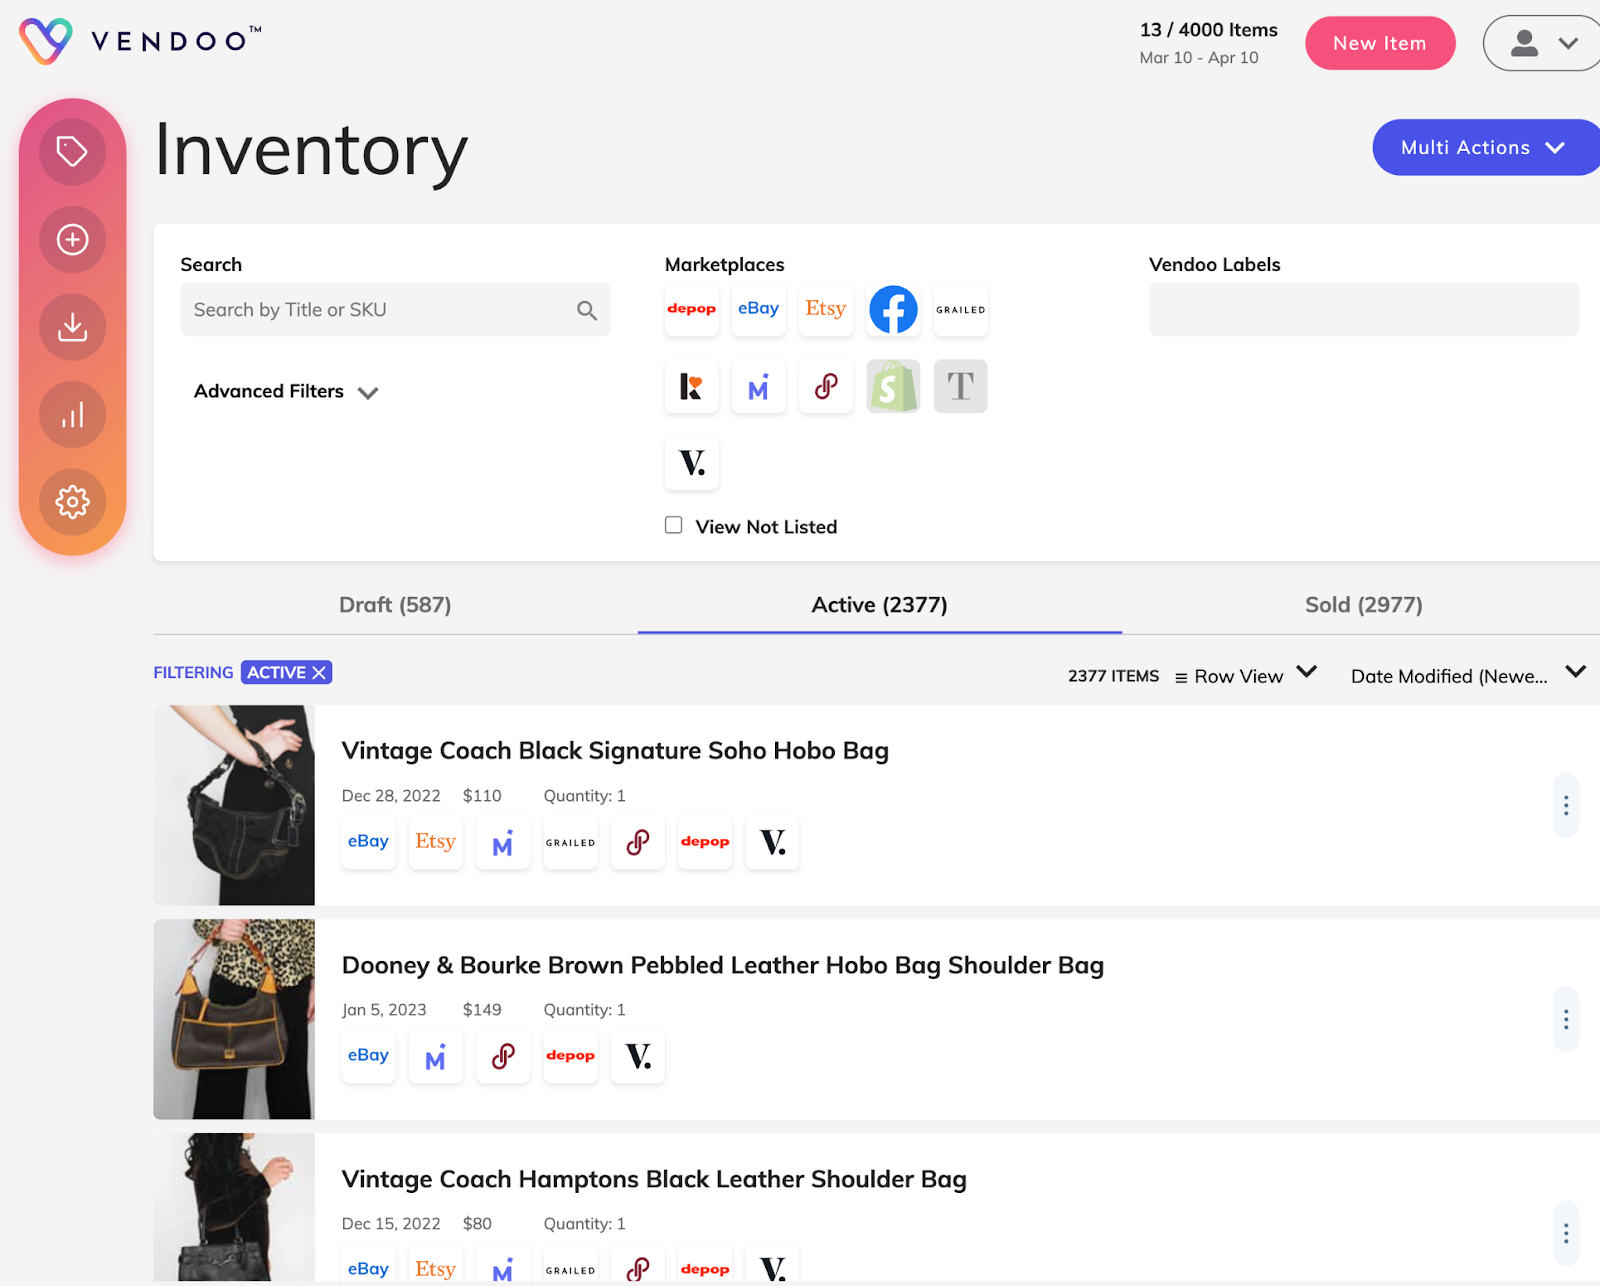 Vendoo inventory management